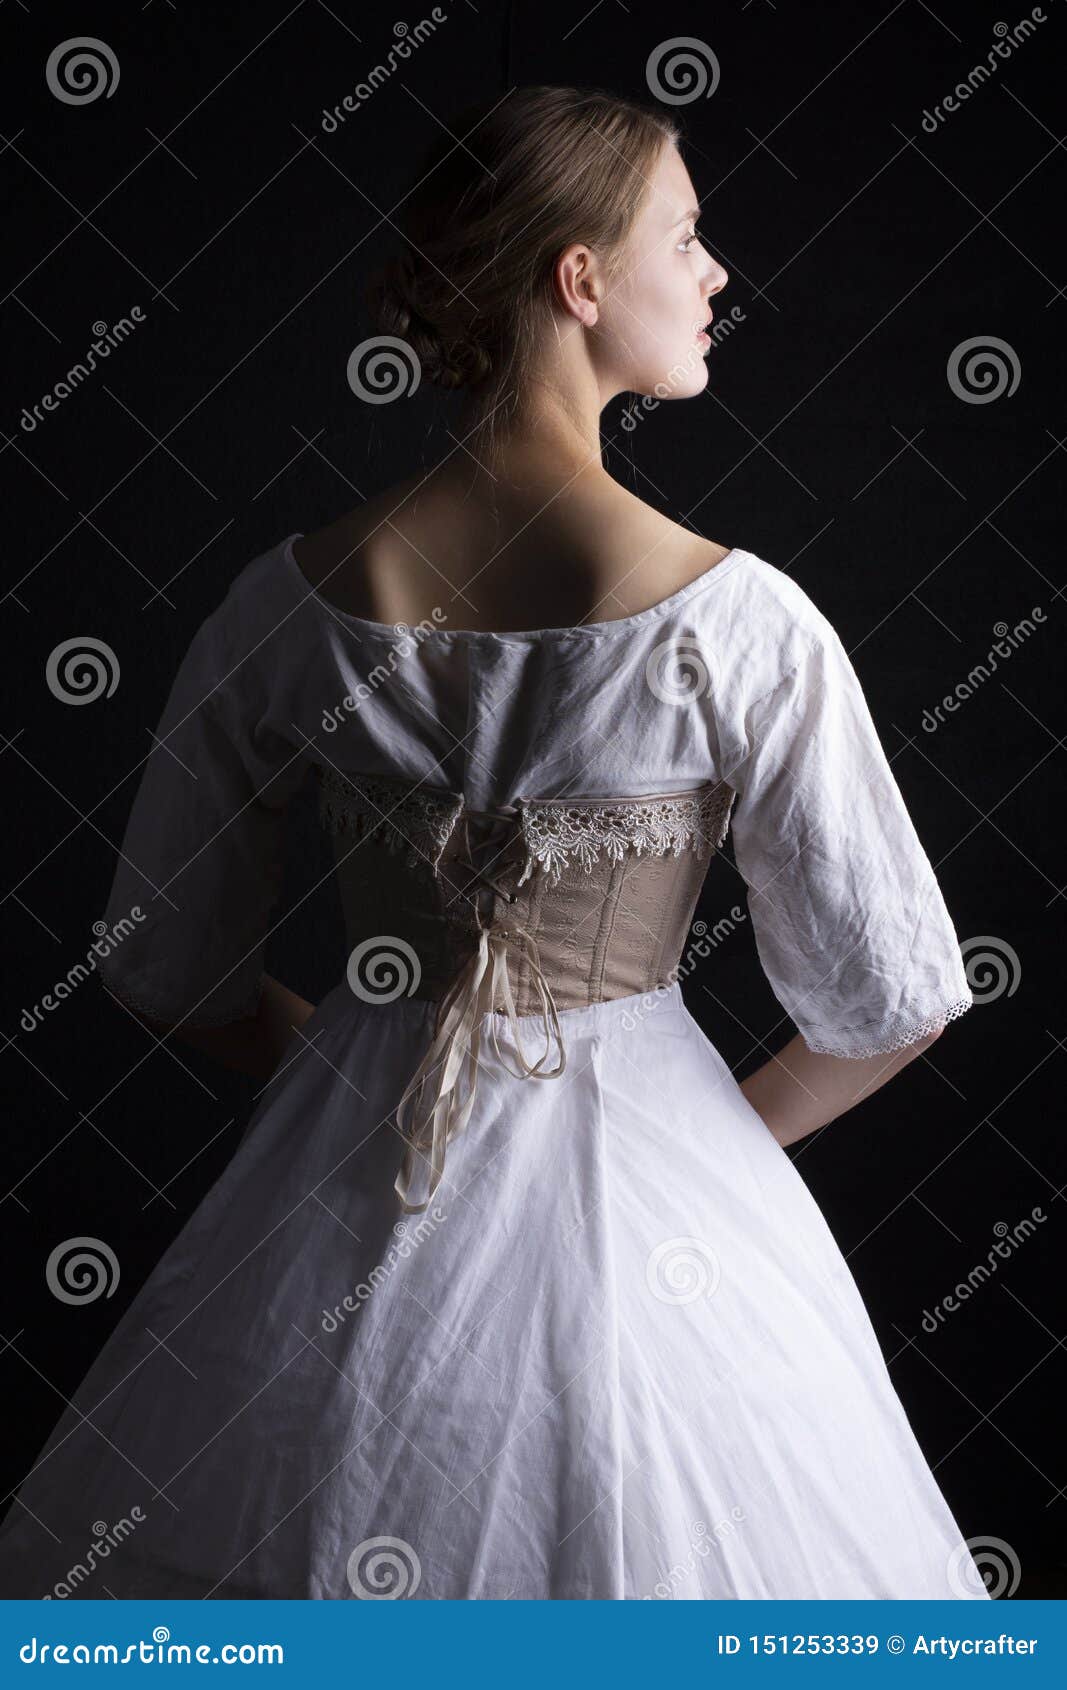 https://thumbs.dreamstime.com/z/victorian-woman-chemise-corset-crinoline-black-background-victorian-woman-underwear-151253339.jpg